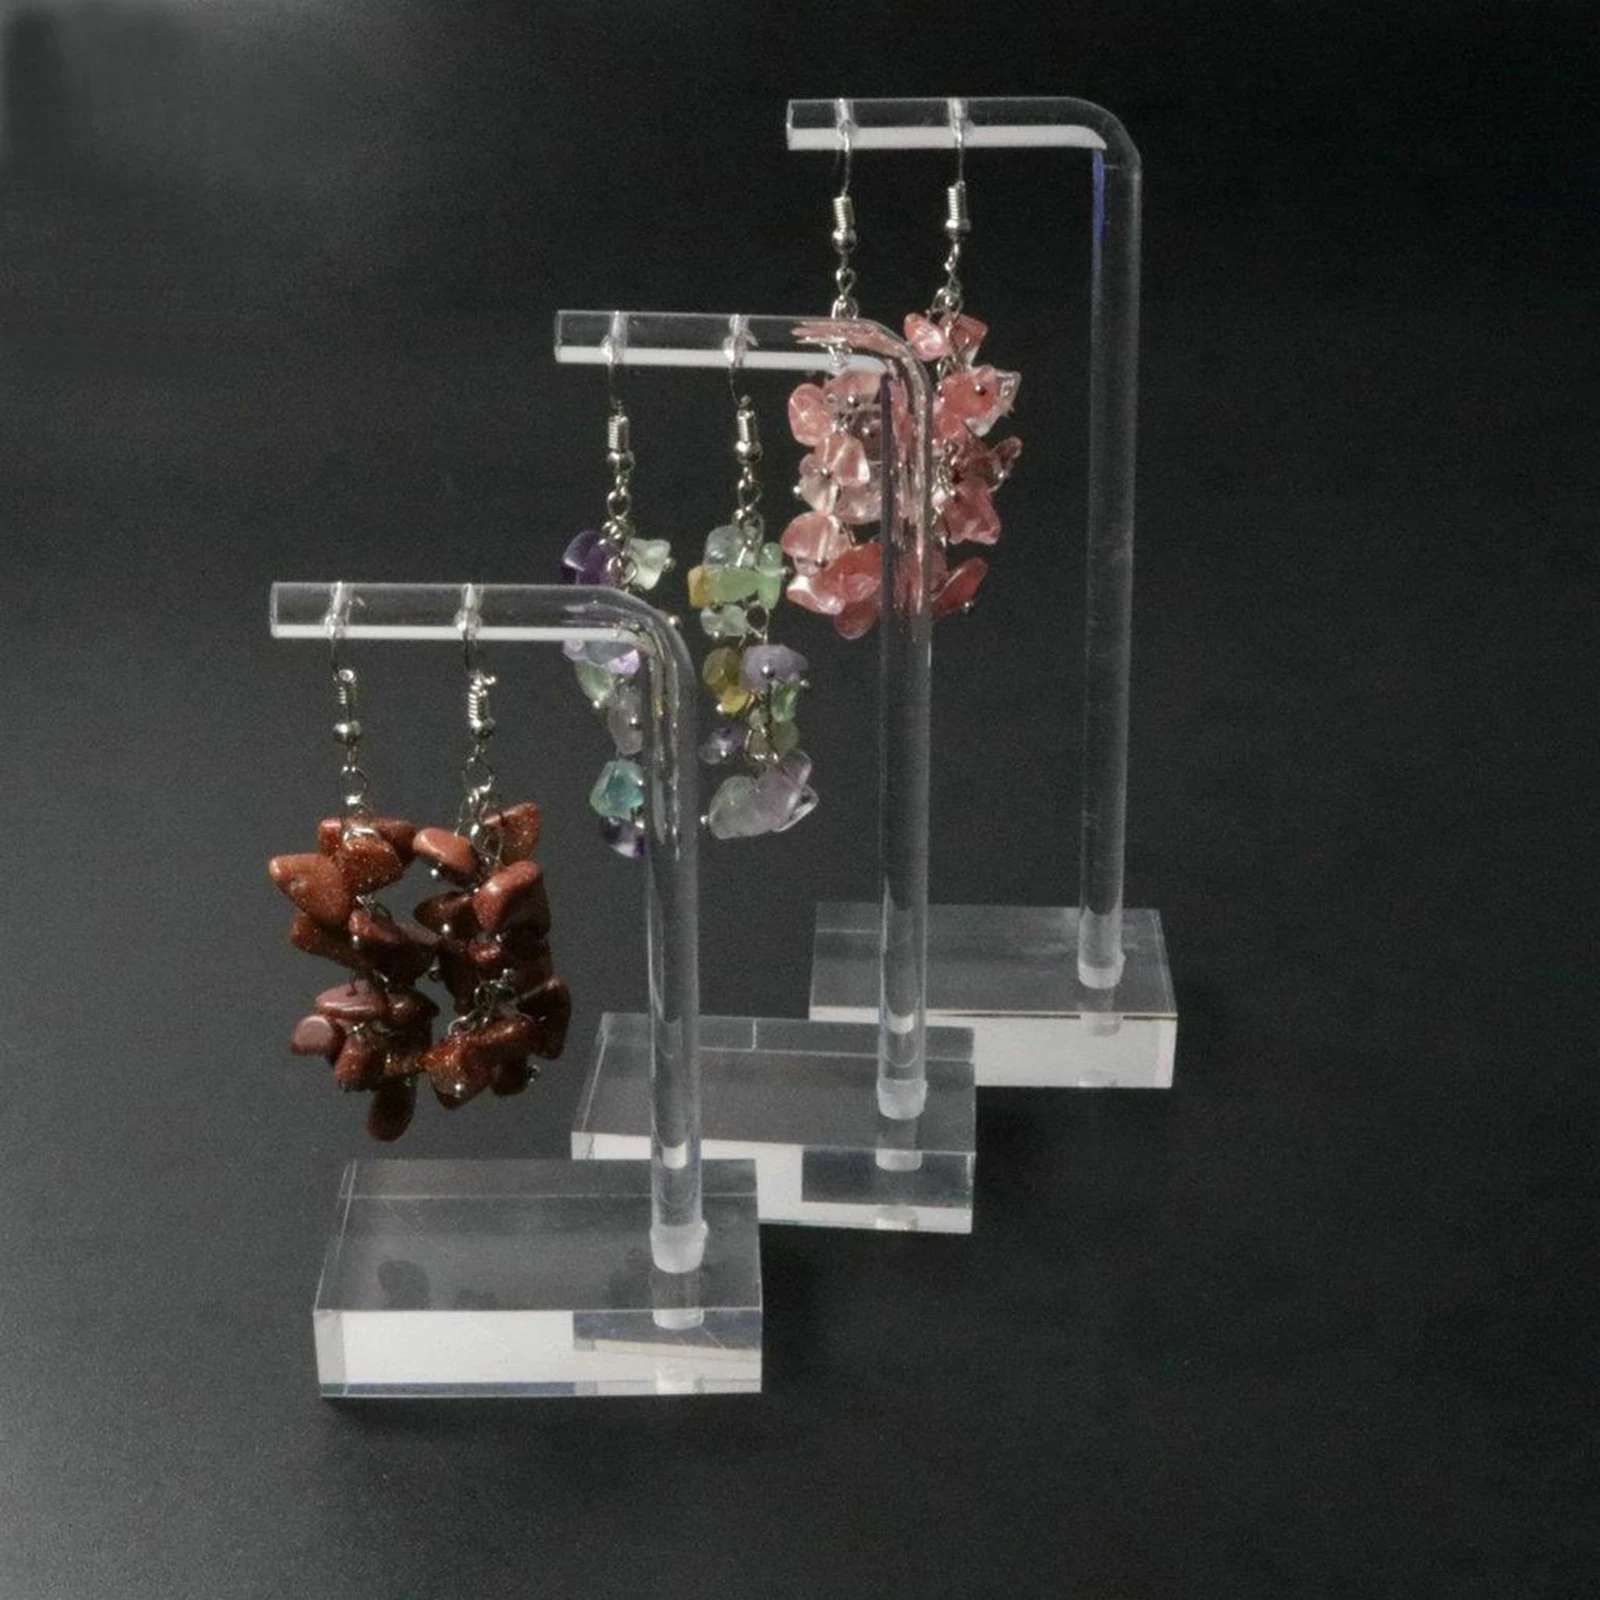 3xAcrylic Drop Earring Hanging Stands Drop Stud Earring Jewellery Display Stand 